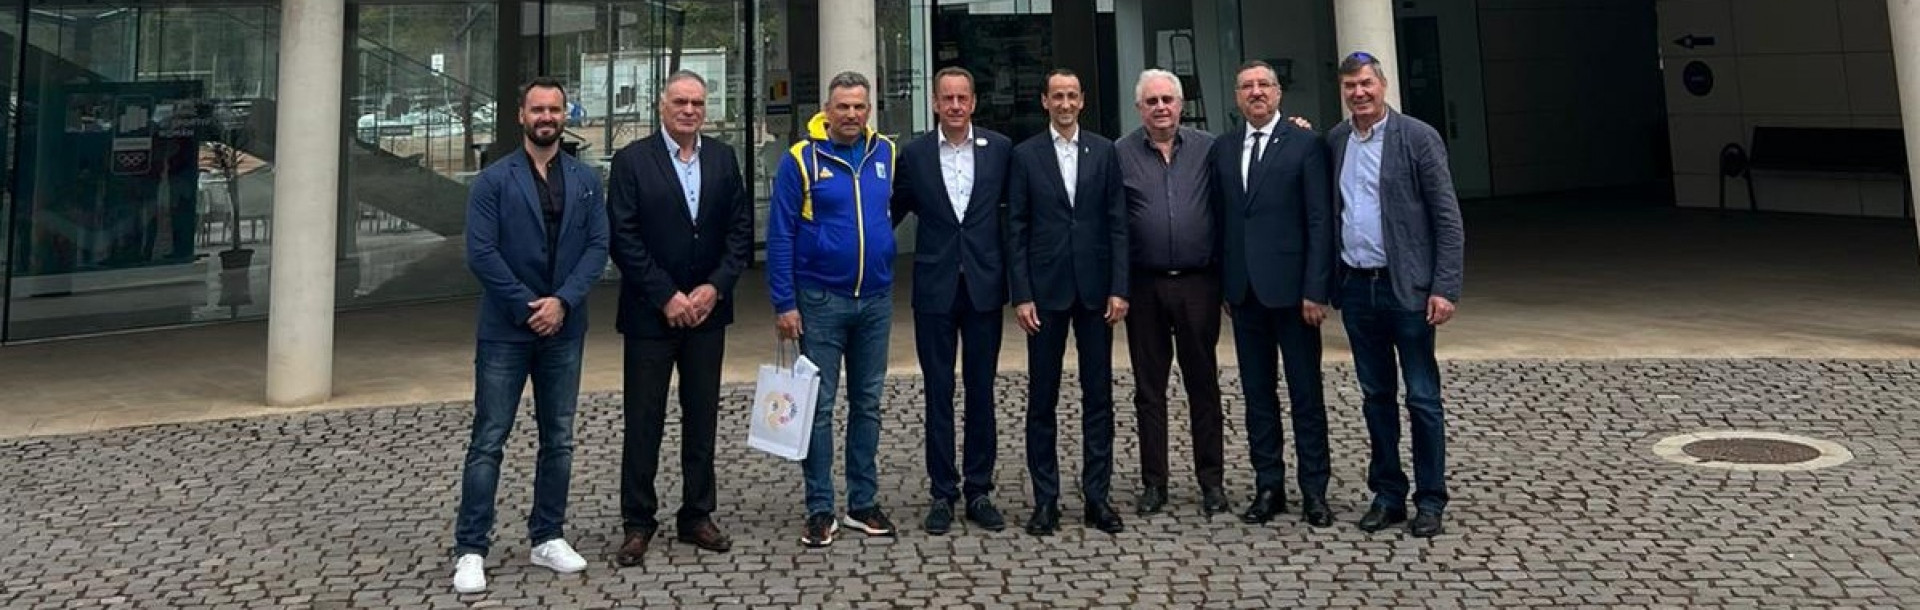 ICF President thanks Romanian Canoe Federation on trip to meet Ukrainian athletes